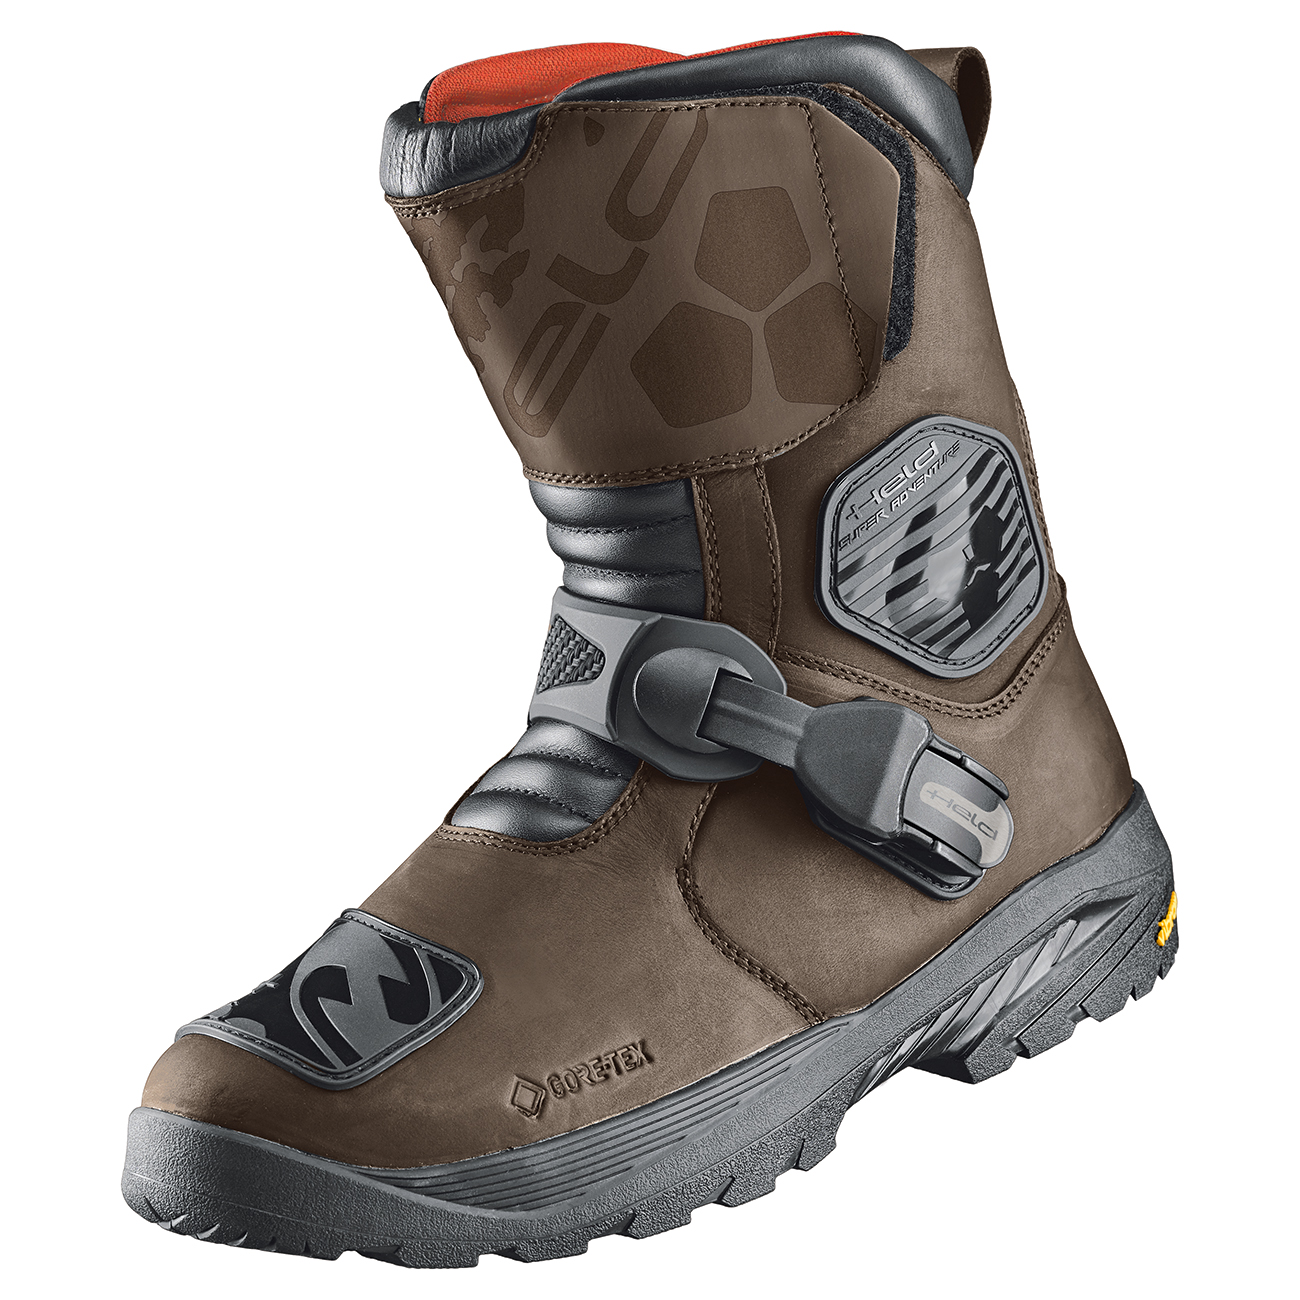 Brickland LC Gore-Tex boots